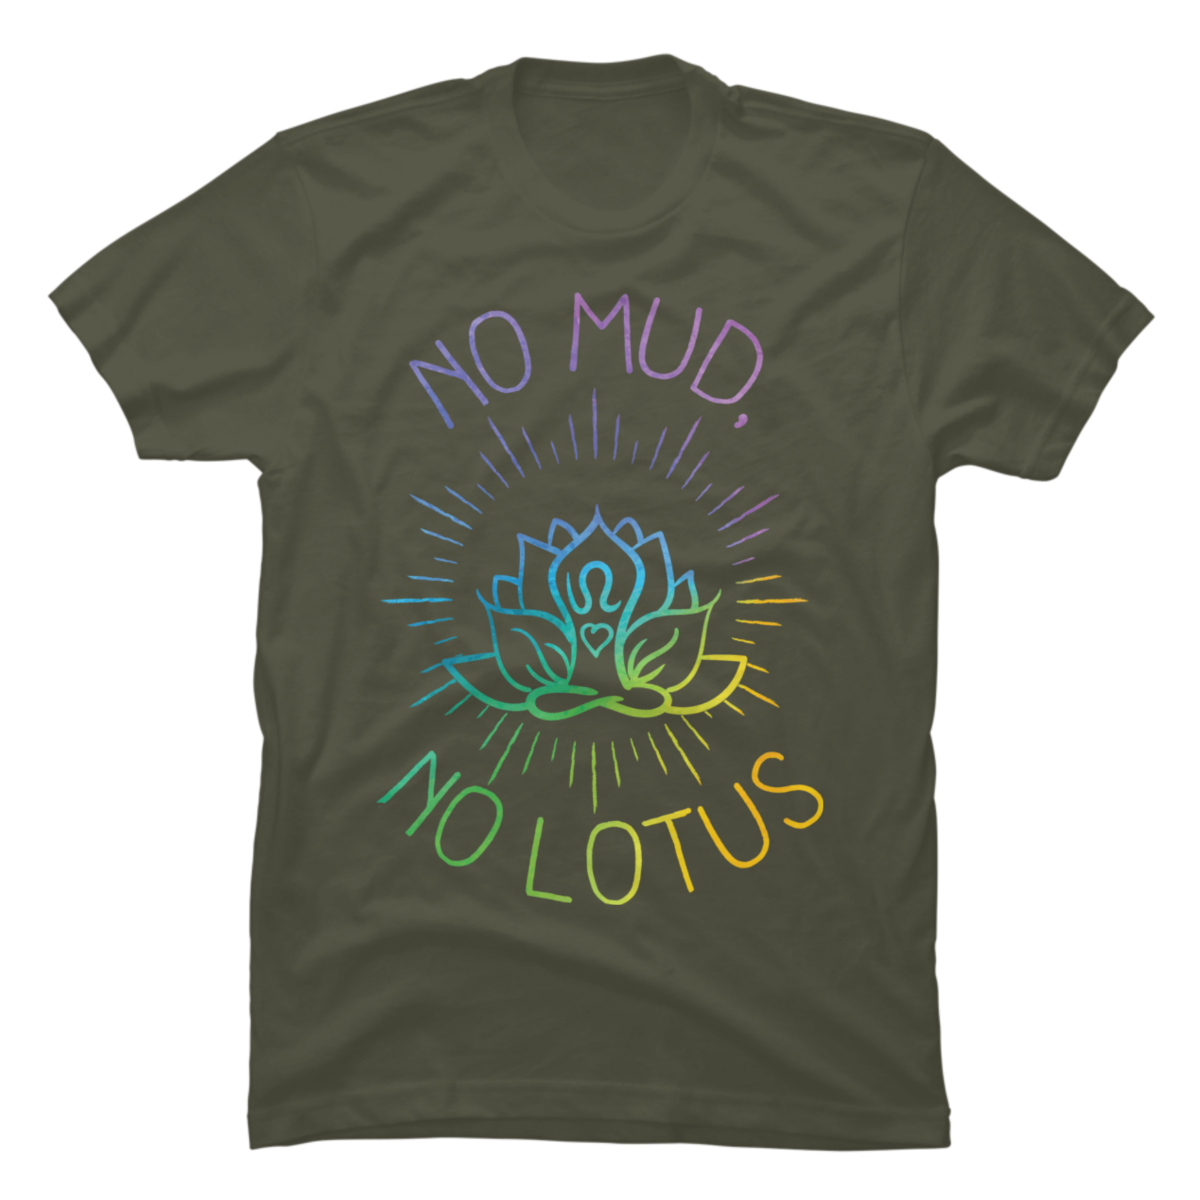 no mud no lotus shirt